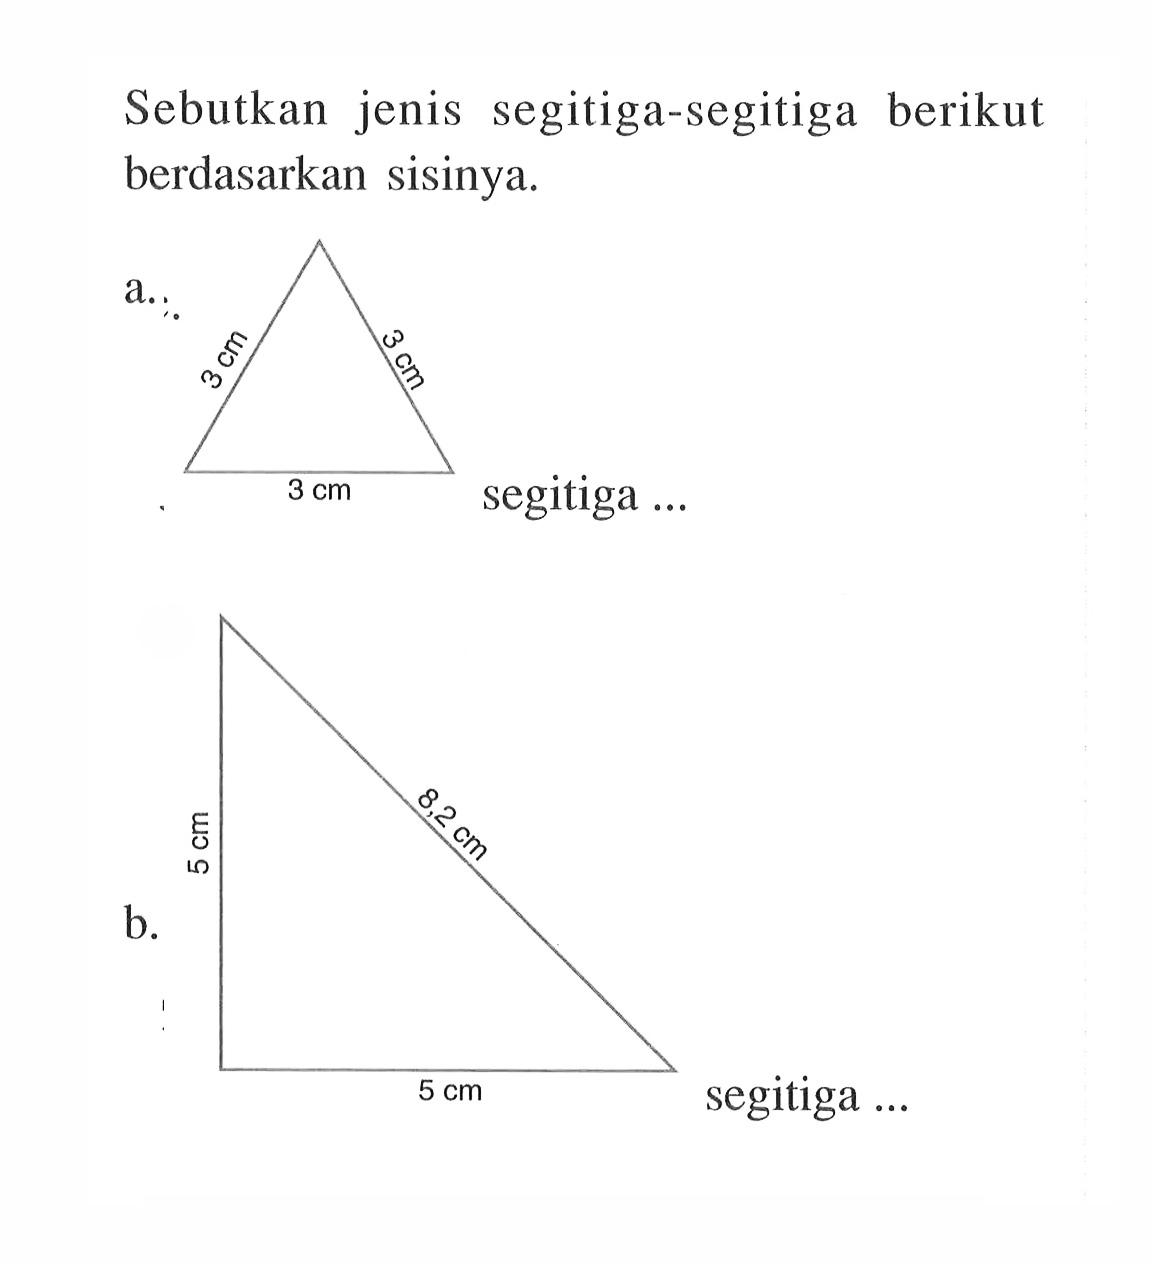 Sebutkan jenis segitiga-segitiga berikut berdasarkan sisinya. a. 3 cm 3 cm 3 cm segitiga ... b. 5 cm 8,2 cm 5 cm segitiga ...